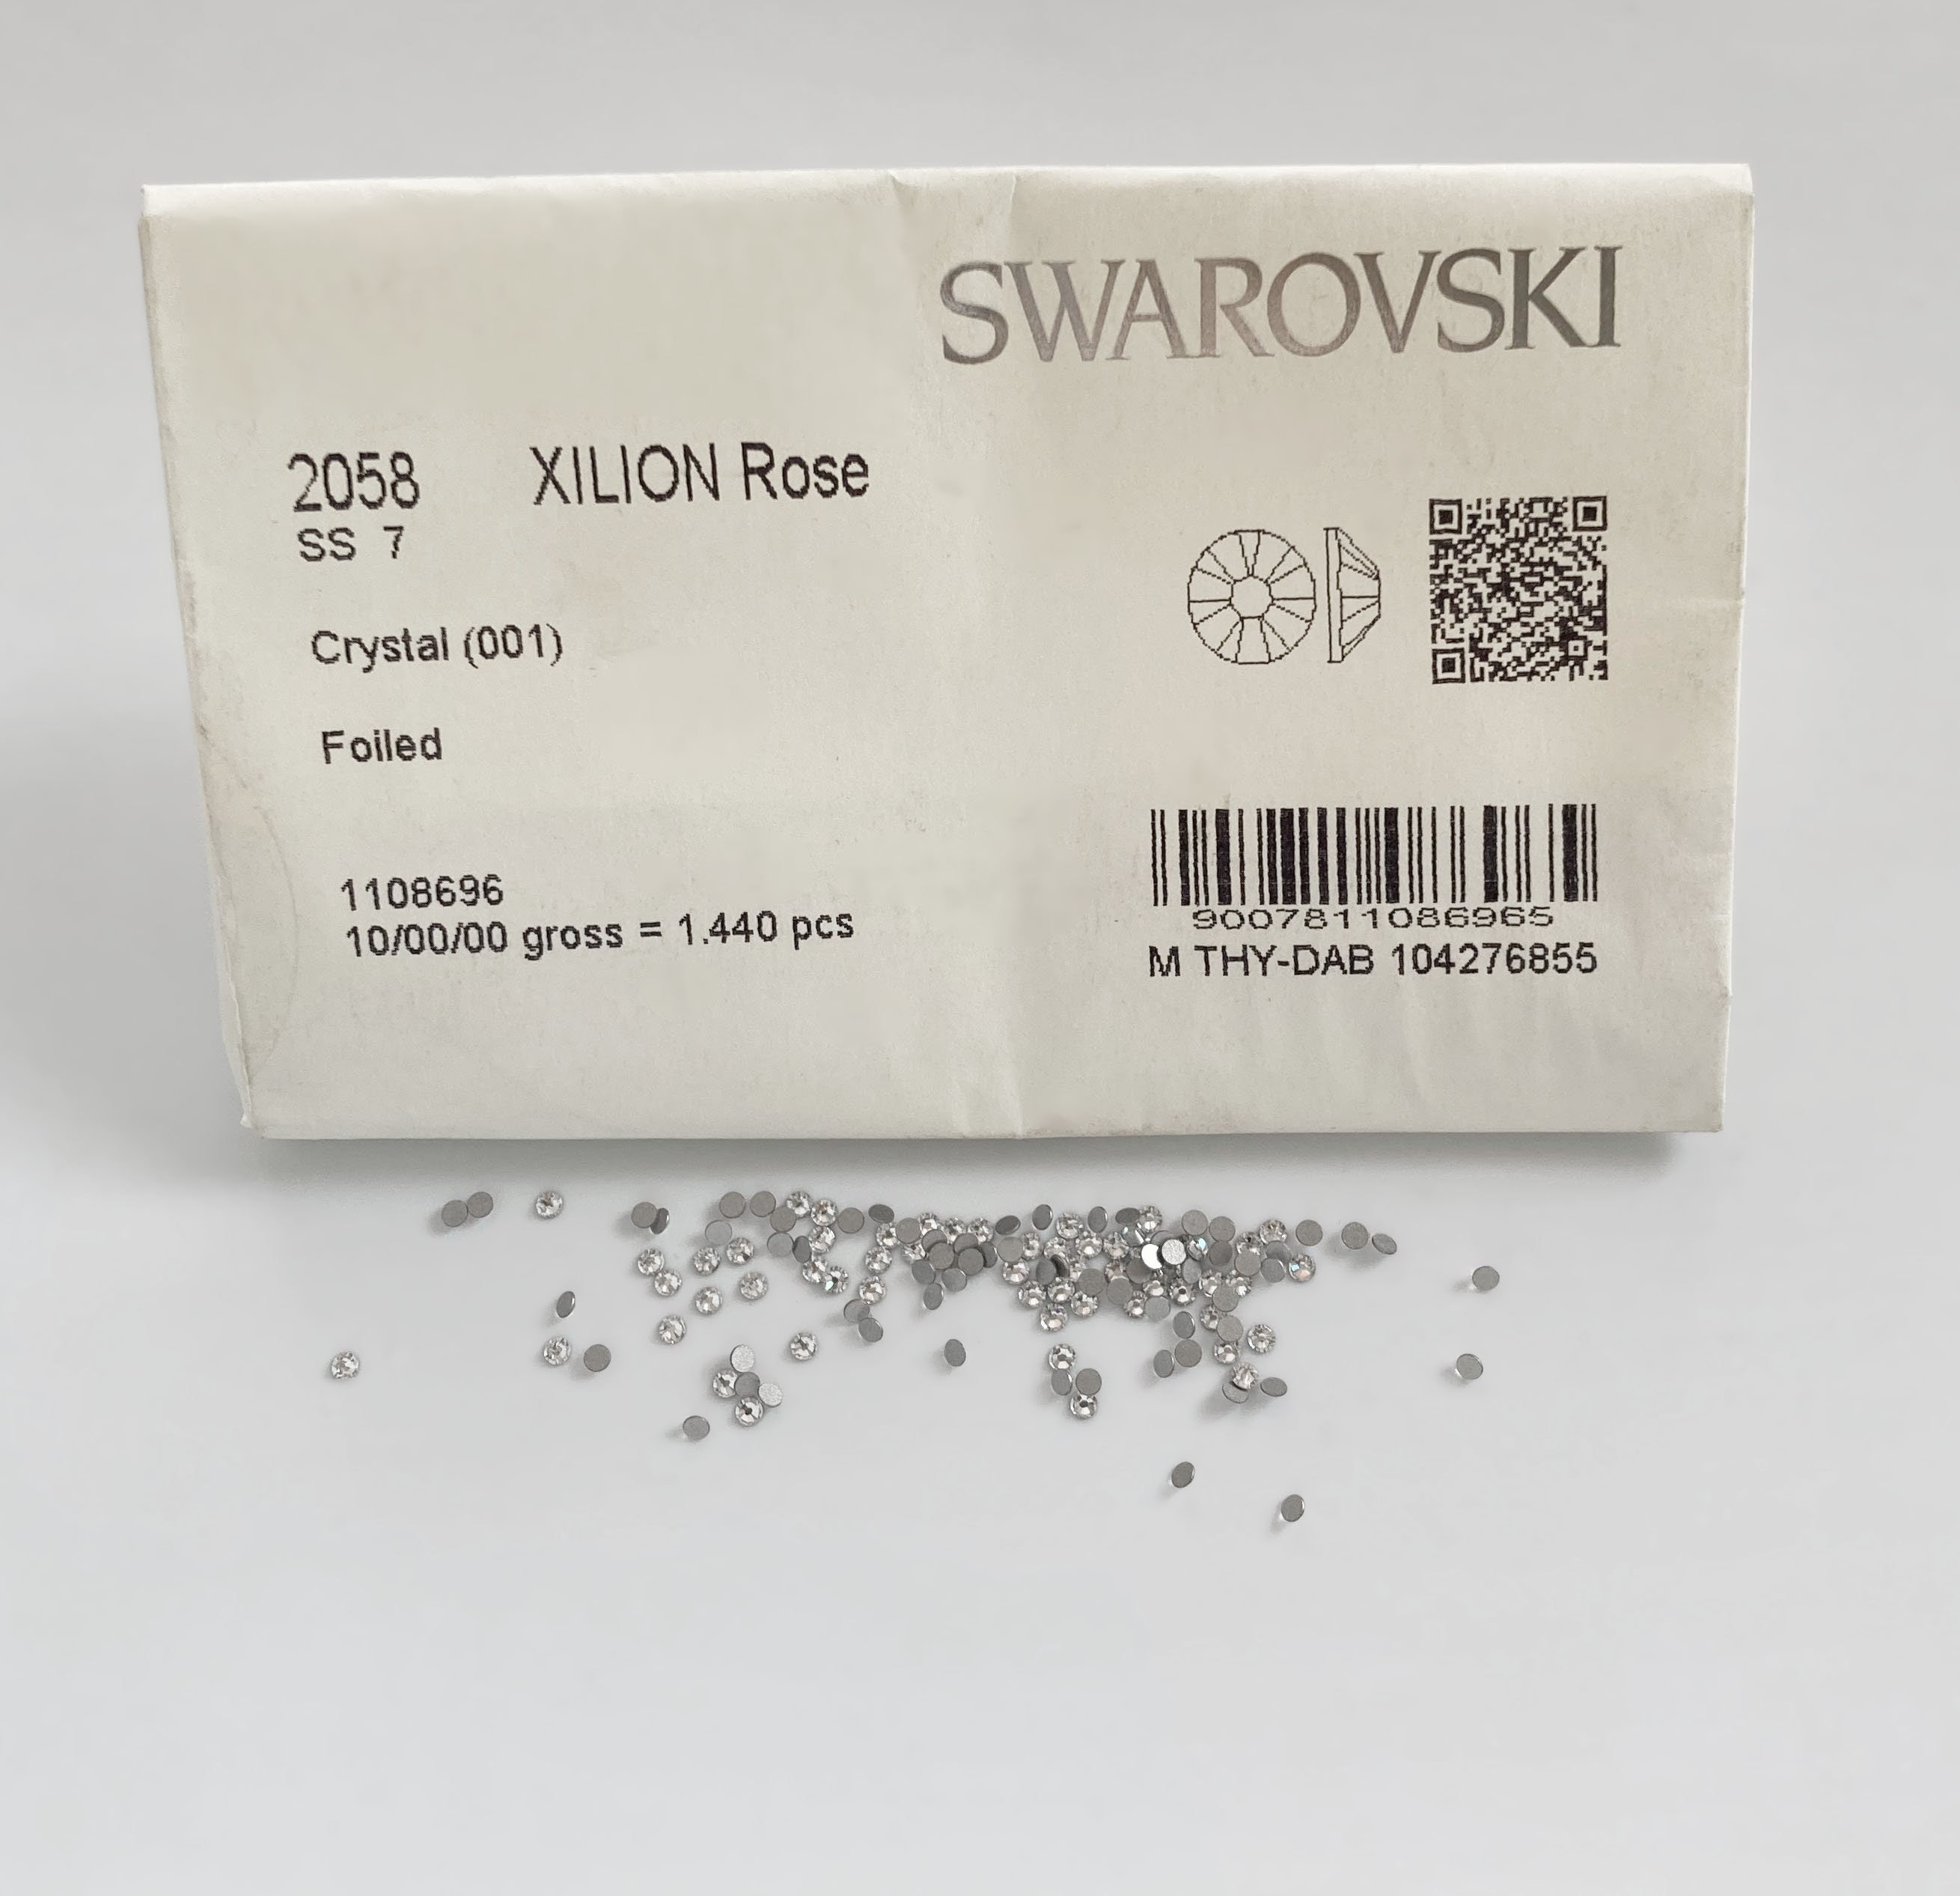 3.8mm Swarovski Flat Back Crystals, Crystal Volcano, Pack of 20 –  Beaducation